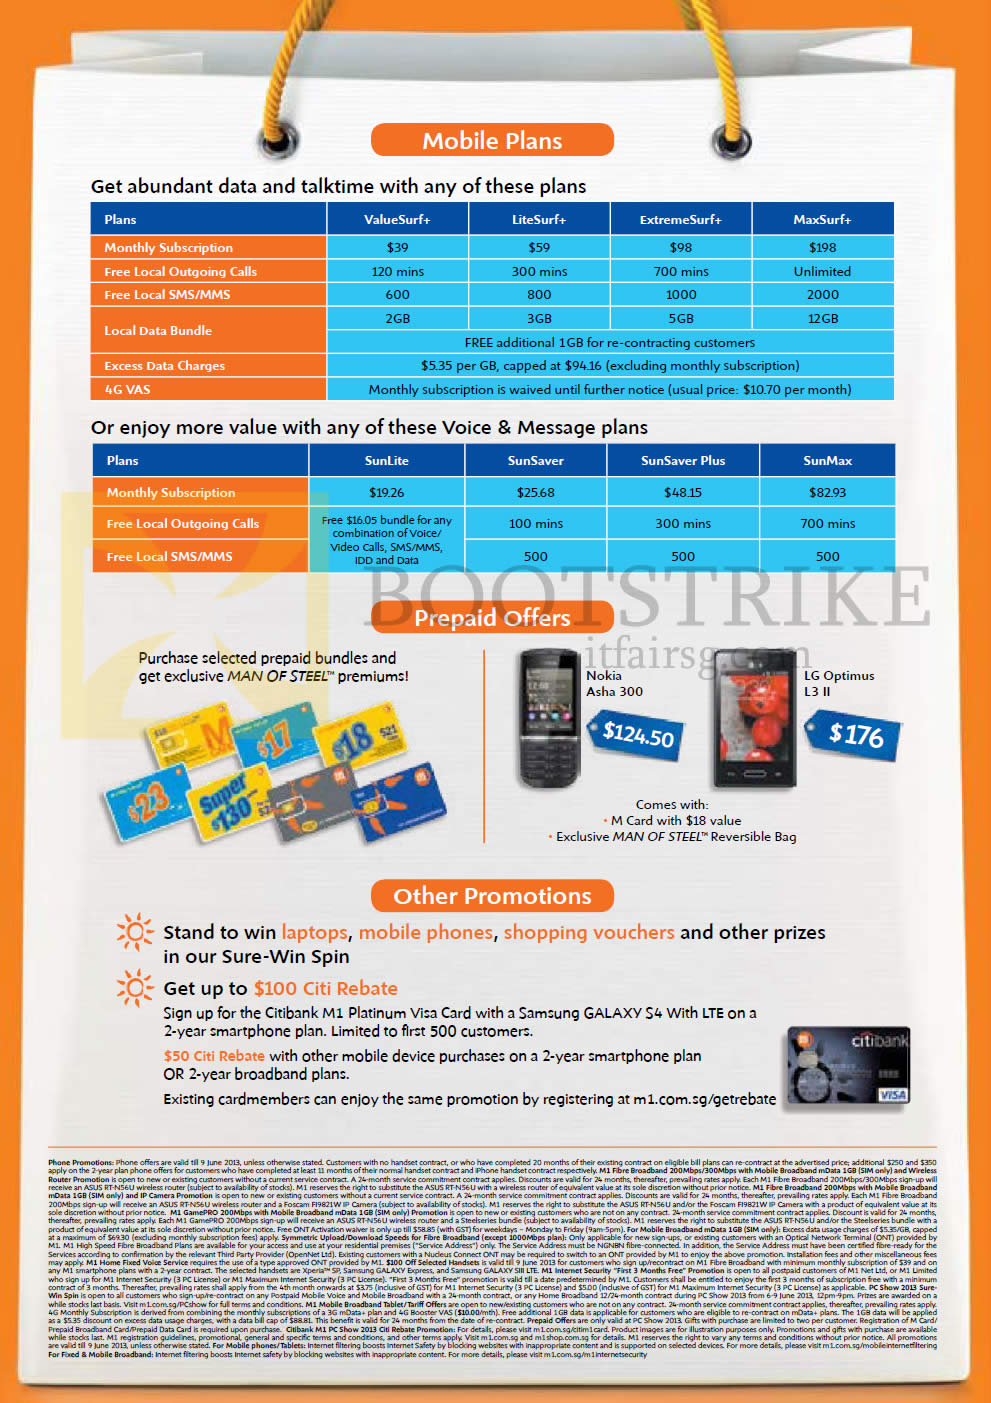 PC SHOW 2013 price list image brochure of M1 Mobile Plans, Prepaid M Card Nokia Asha 300, LG Optimus L3 II, Sure Win Spin, Citibank CitiRebate